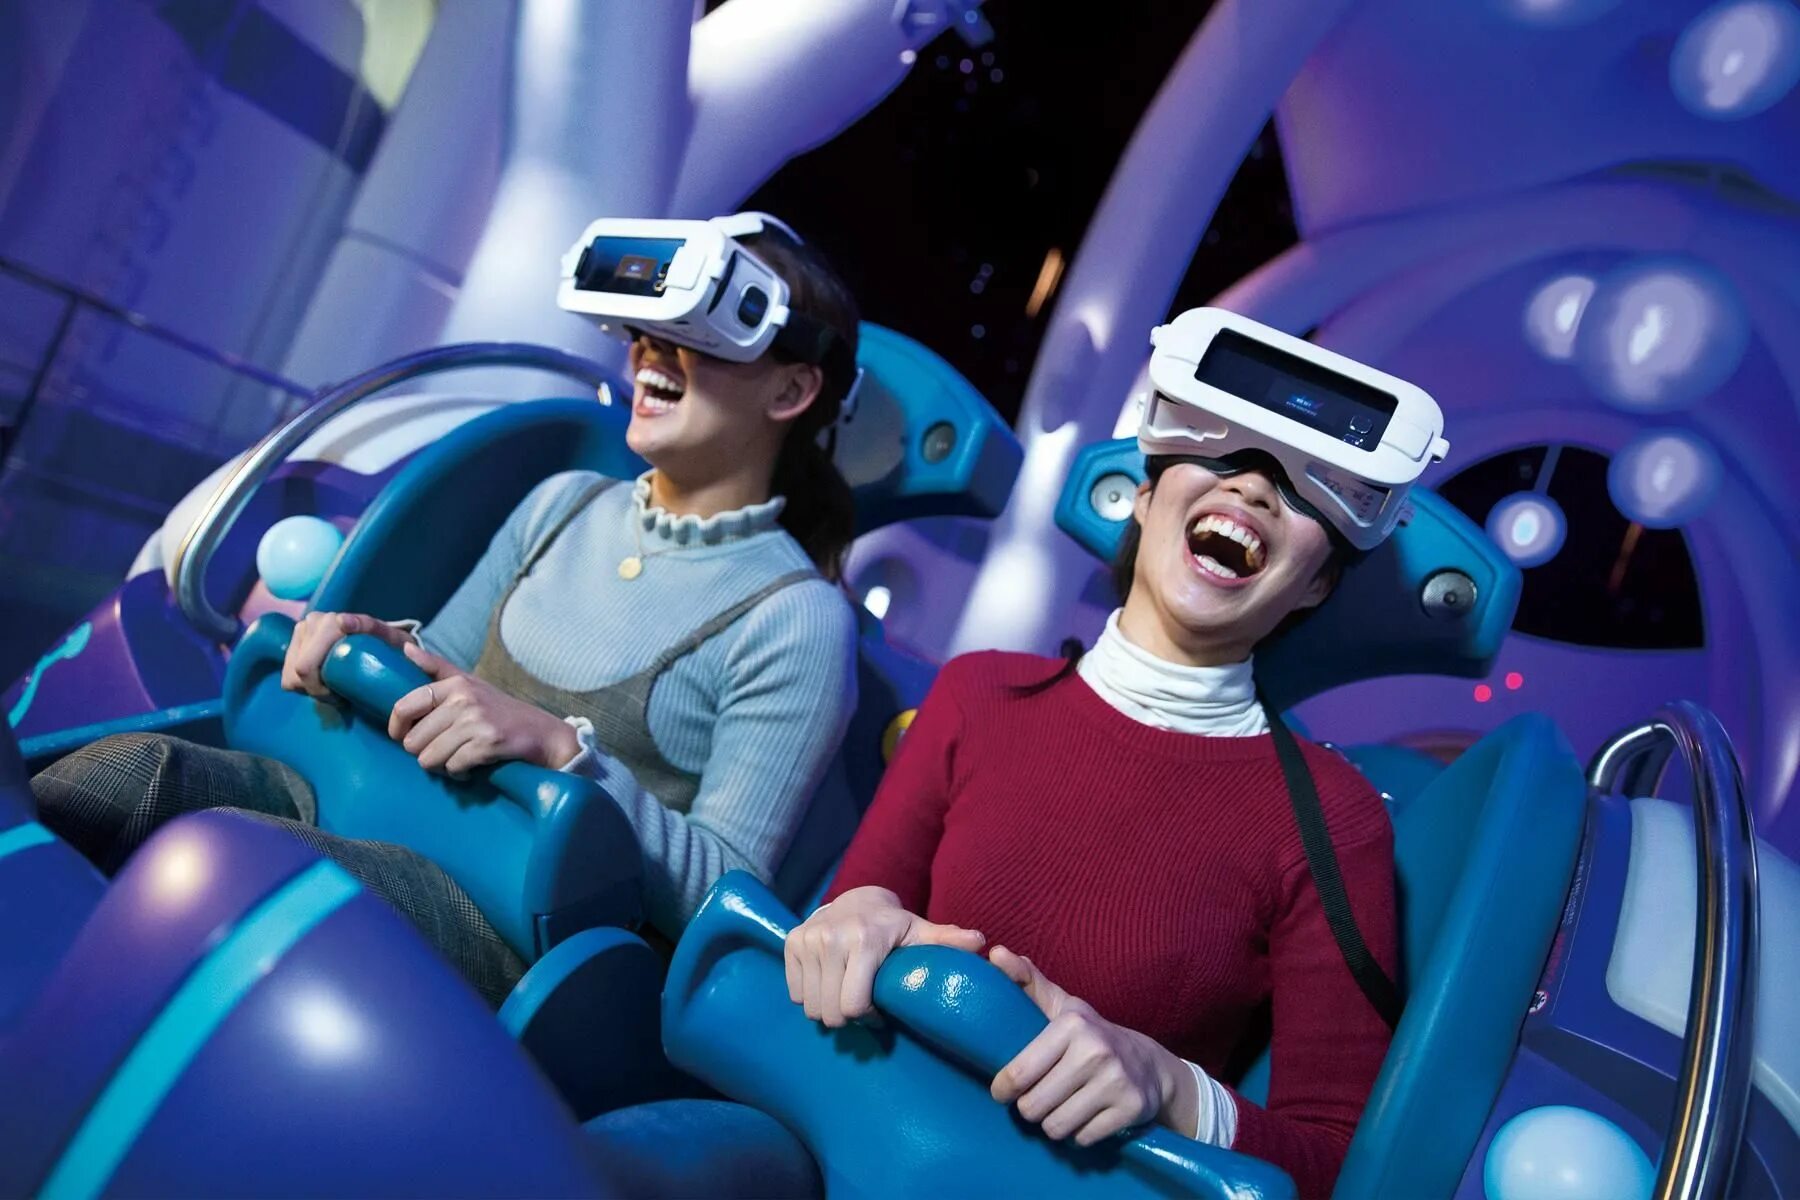 Vr riding. 5d кинотеатр американские горки. Американские горки 3d Cinema. Titan VR Вегас. Аттракцион VR на мероприятие.